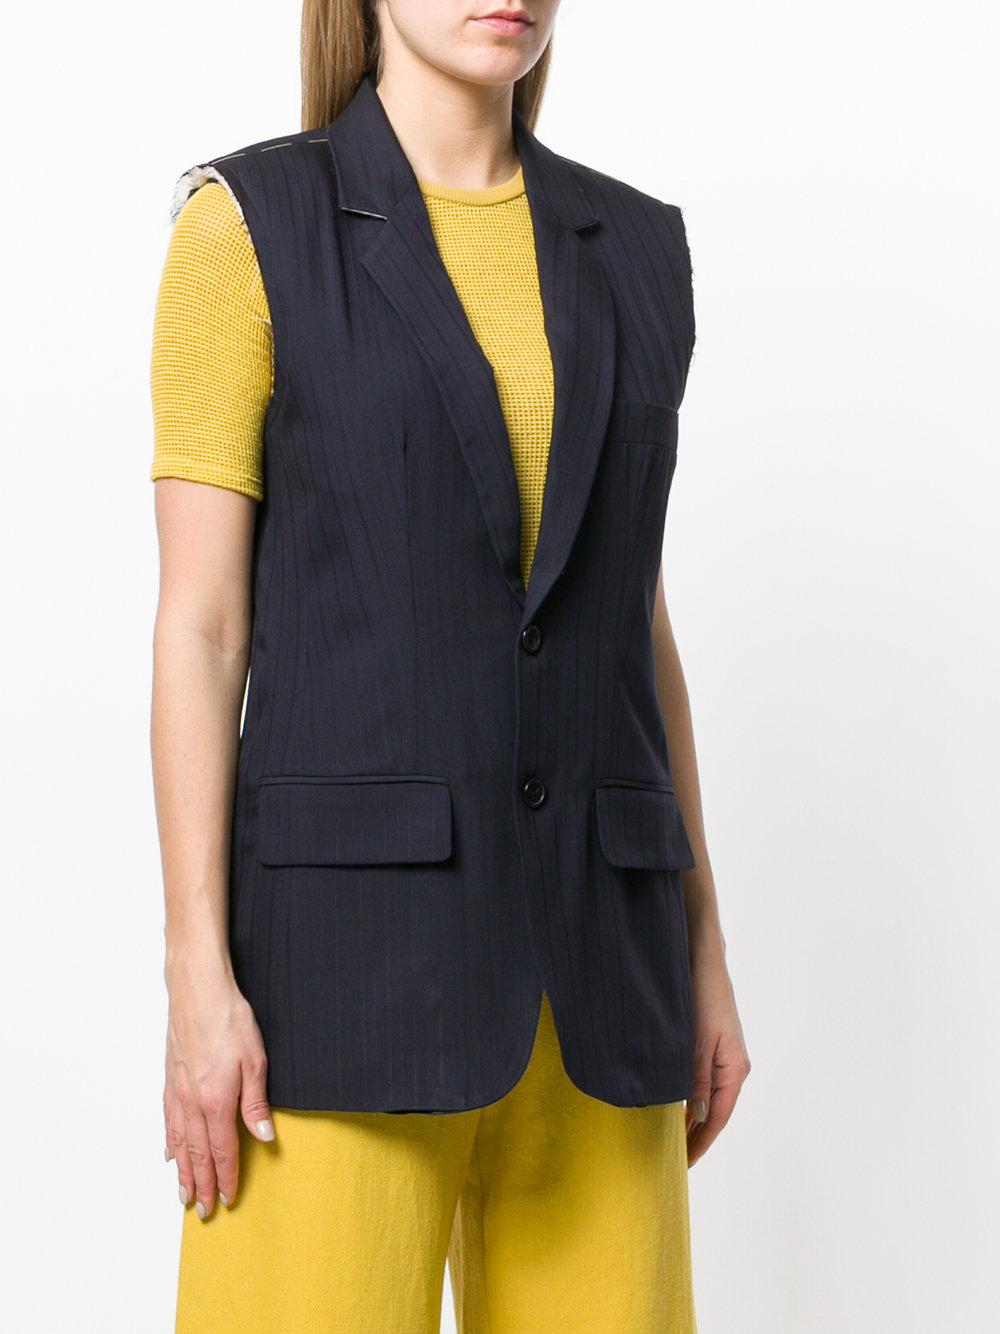 Erika Cavallini Semi Couture Wool Sleeveless Blazer Jacket in Blue - Lyst